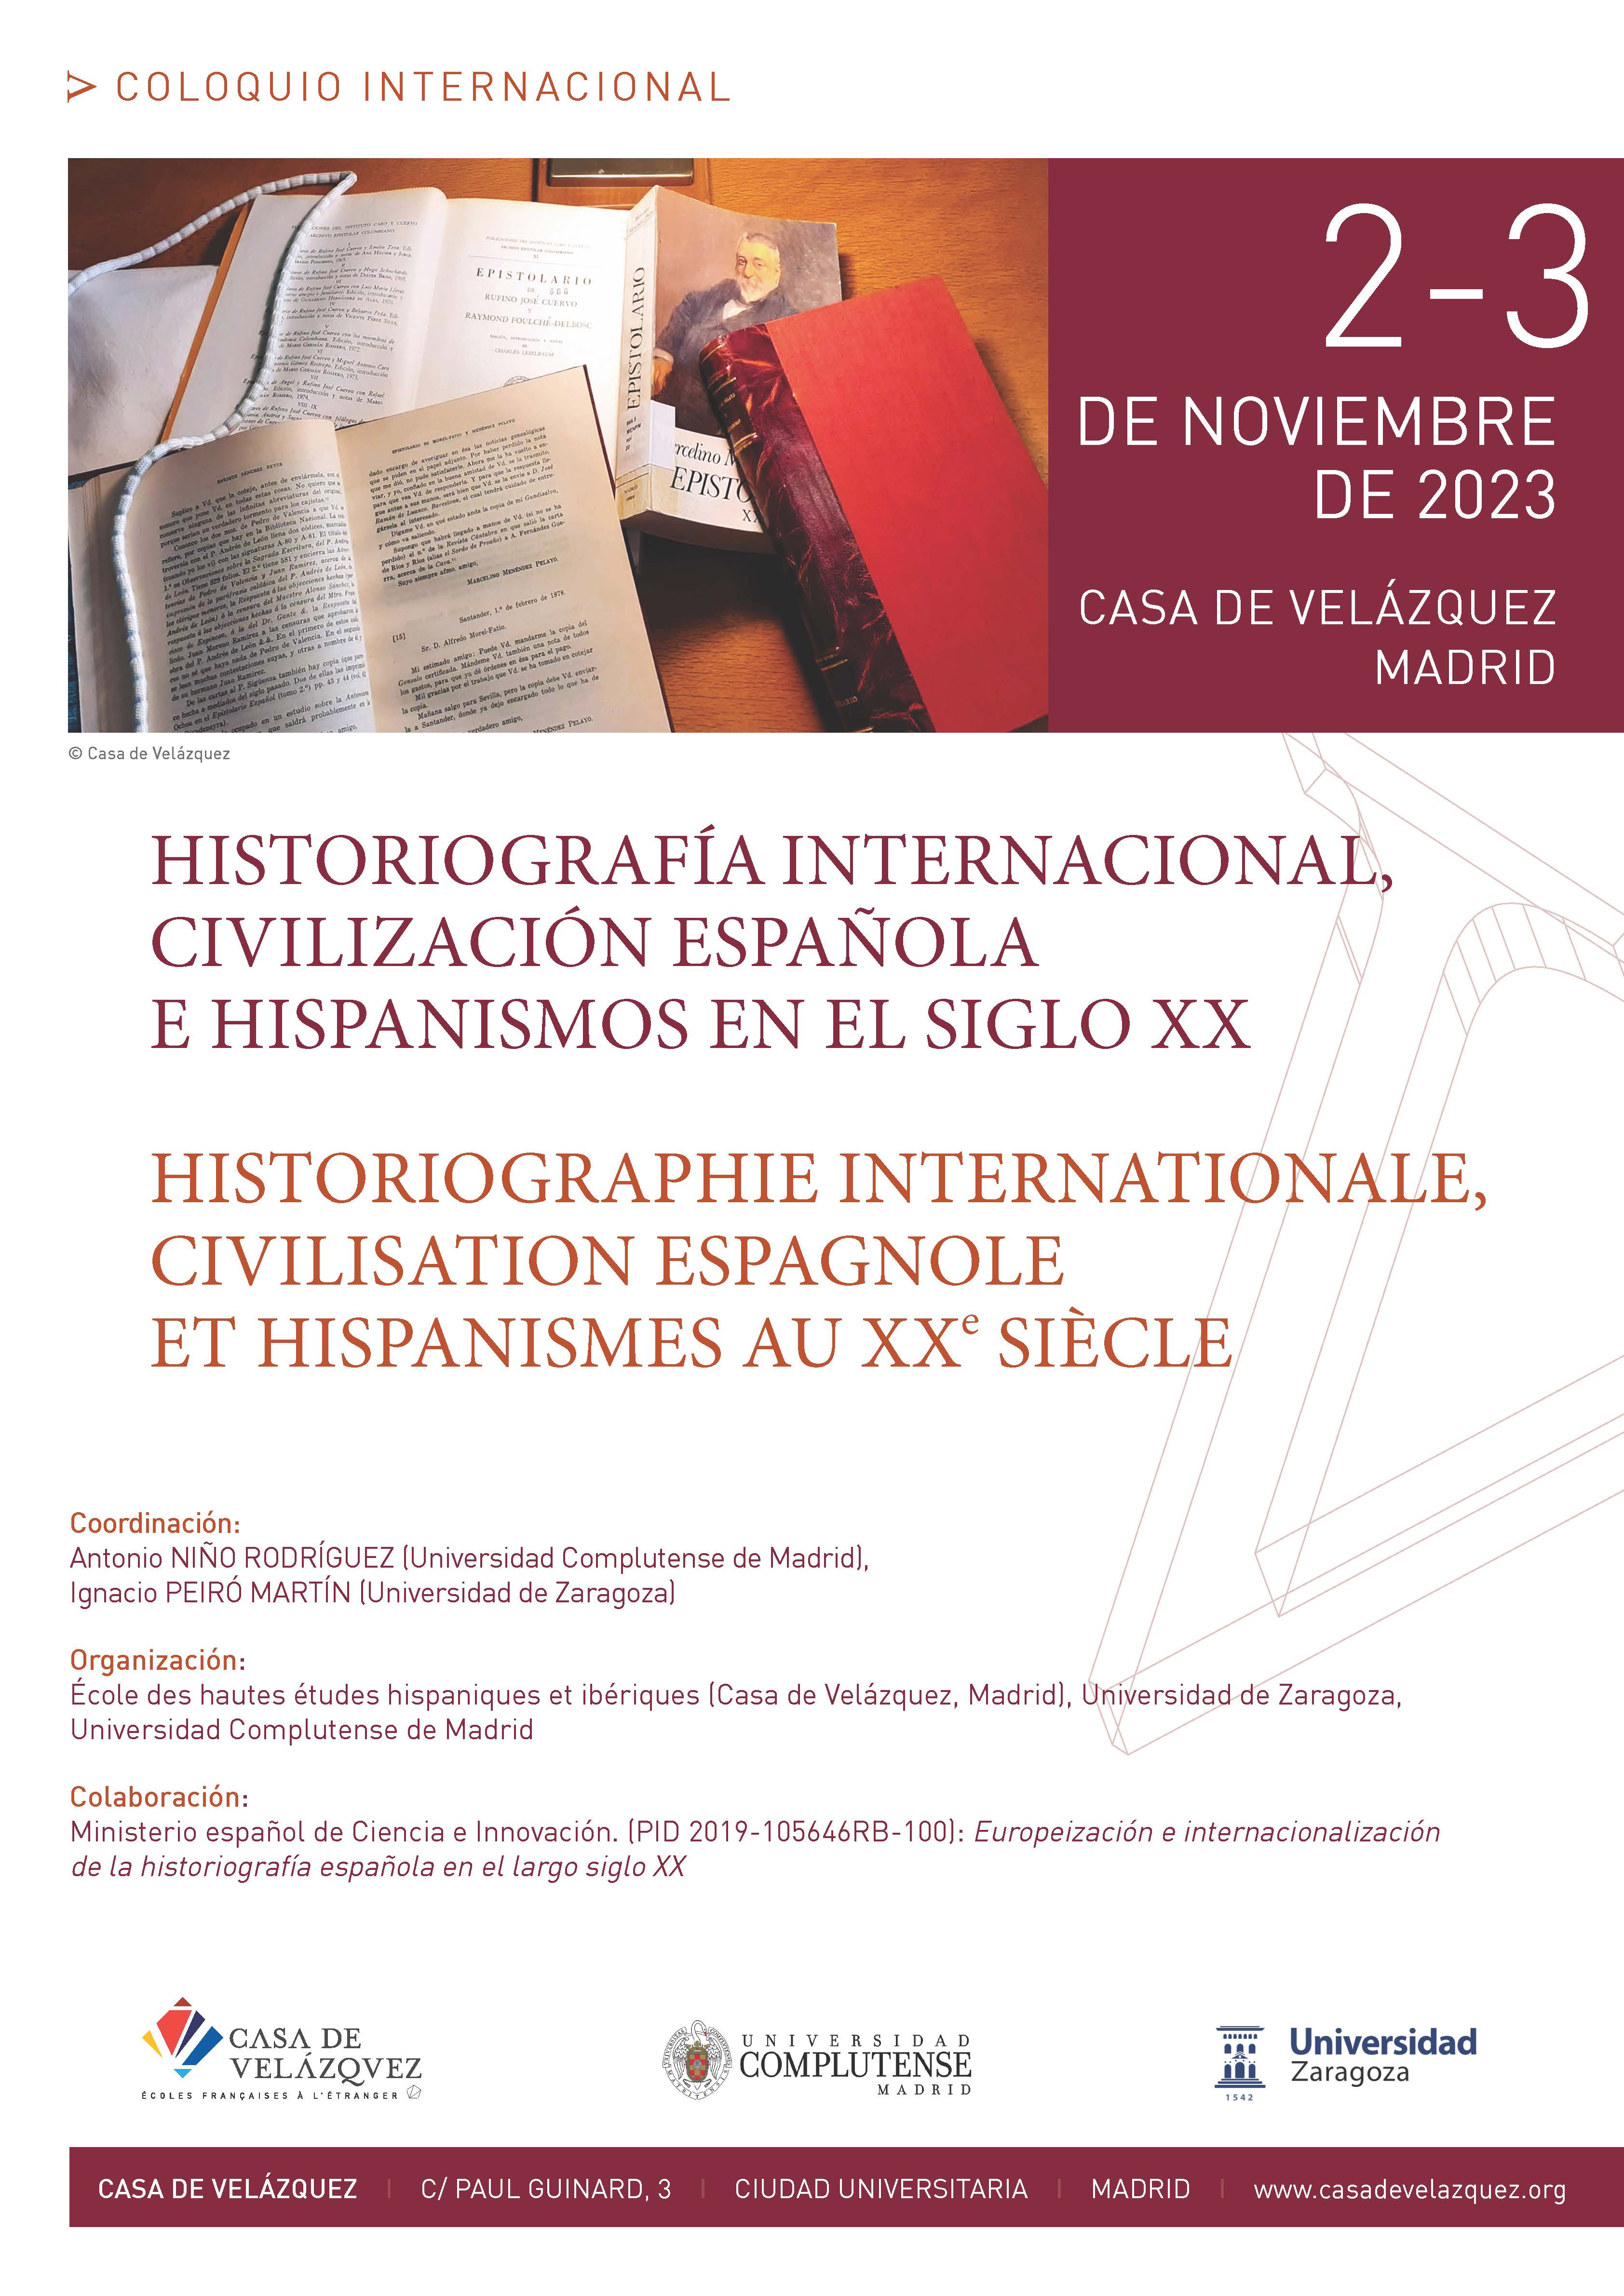 Coloquio Internacional: Historiografía internacional, cIvilización española e hispanismos en el siglo XX (2-3.11.2023)